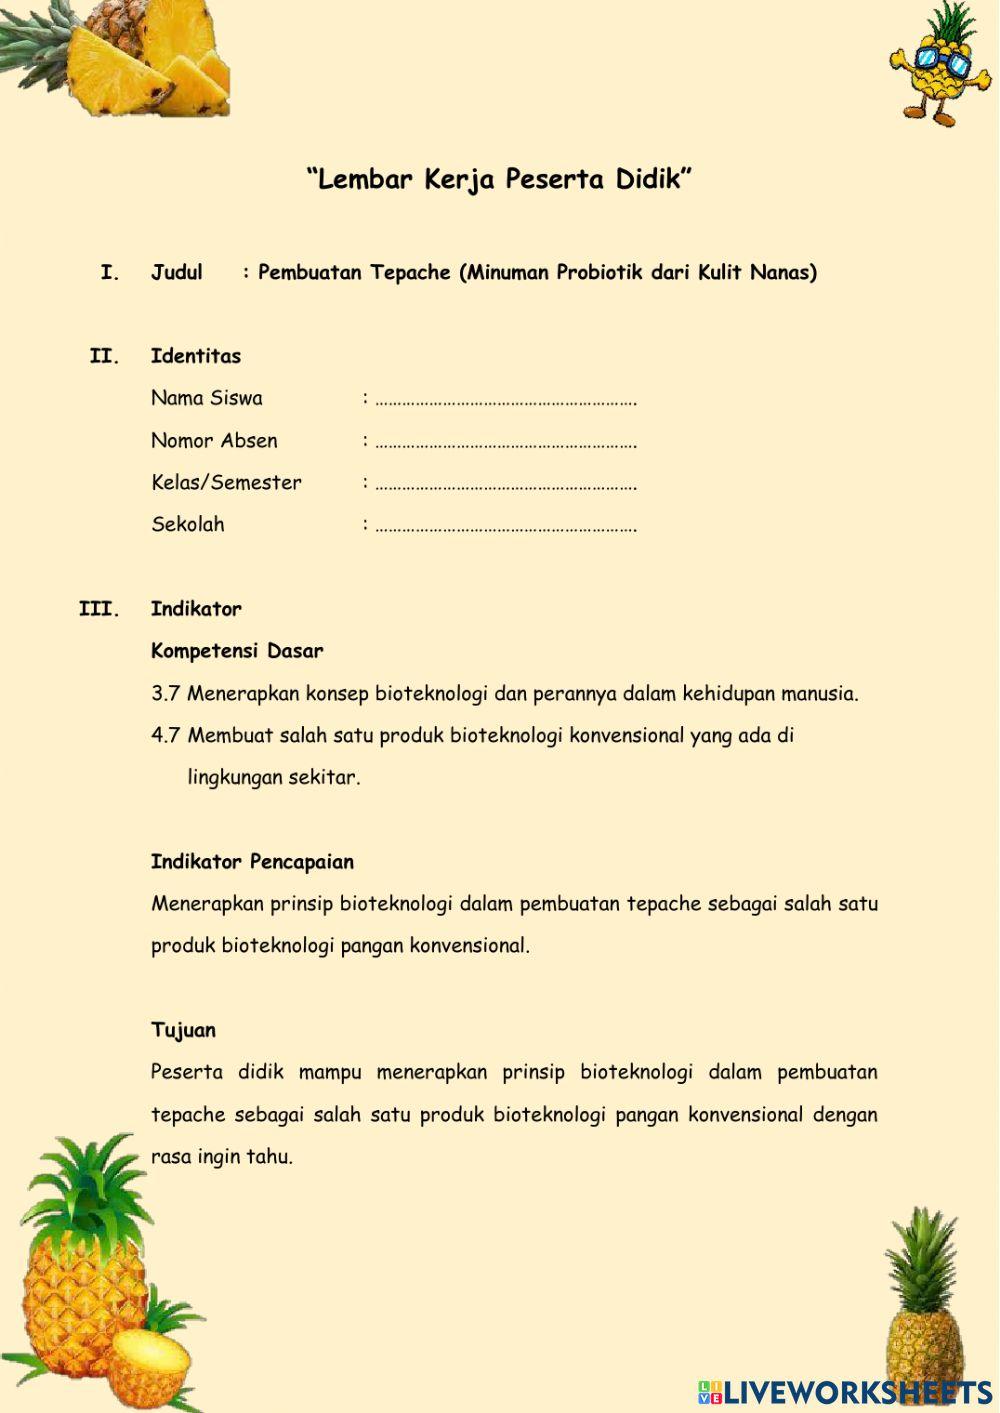 LKPD Proses Pembuatan Tepache Kuit Buah Nanas-Materi Bioteknologi-IPA Kelas IX SMP